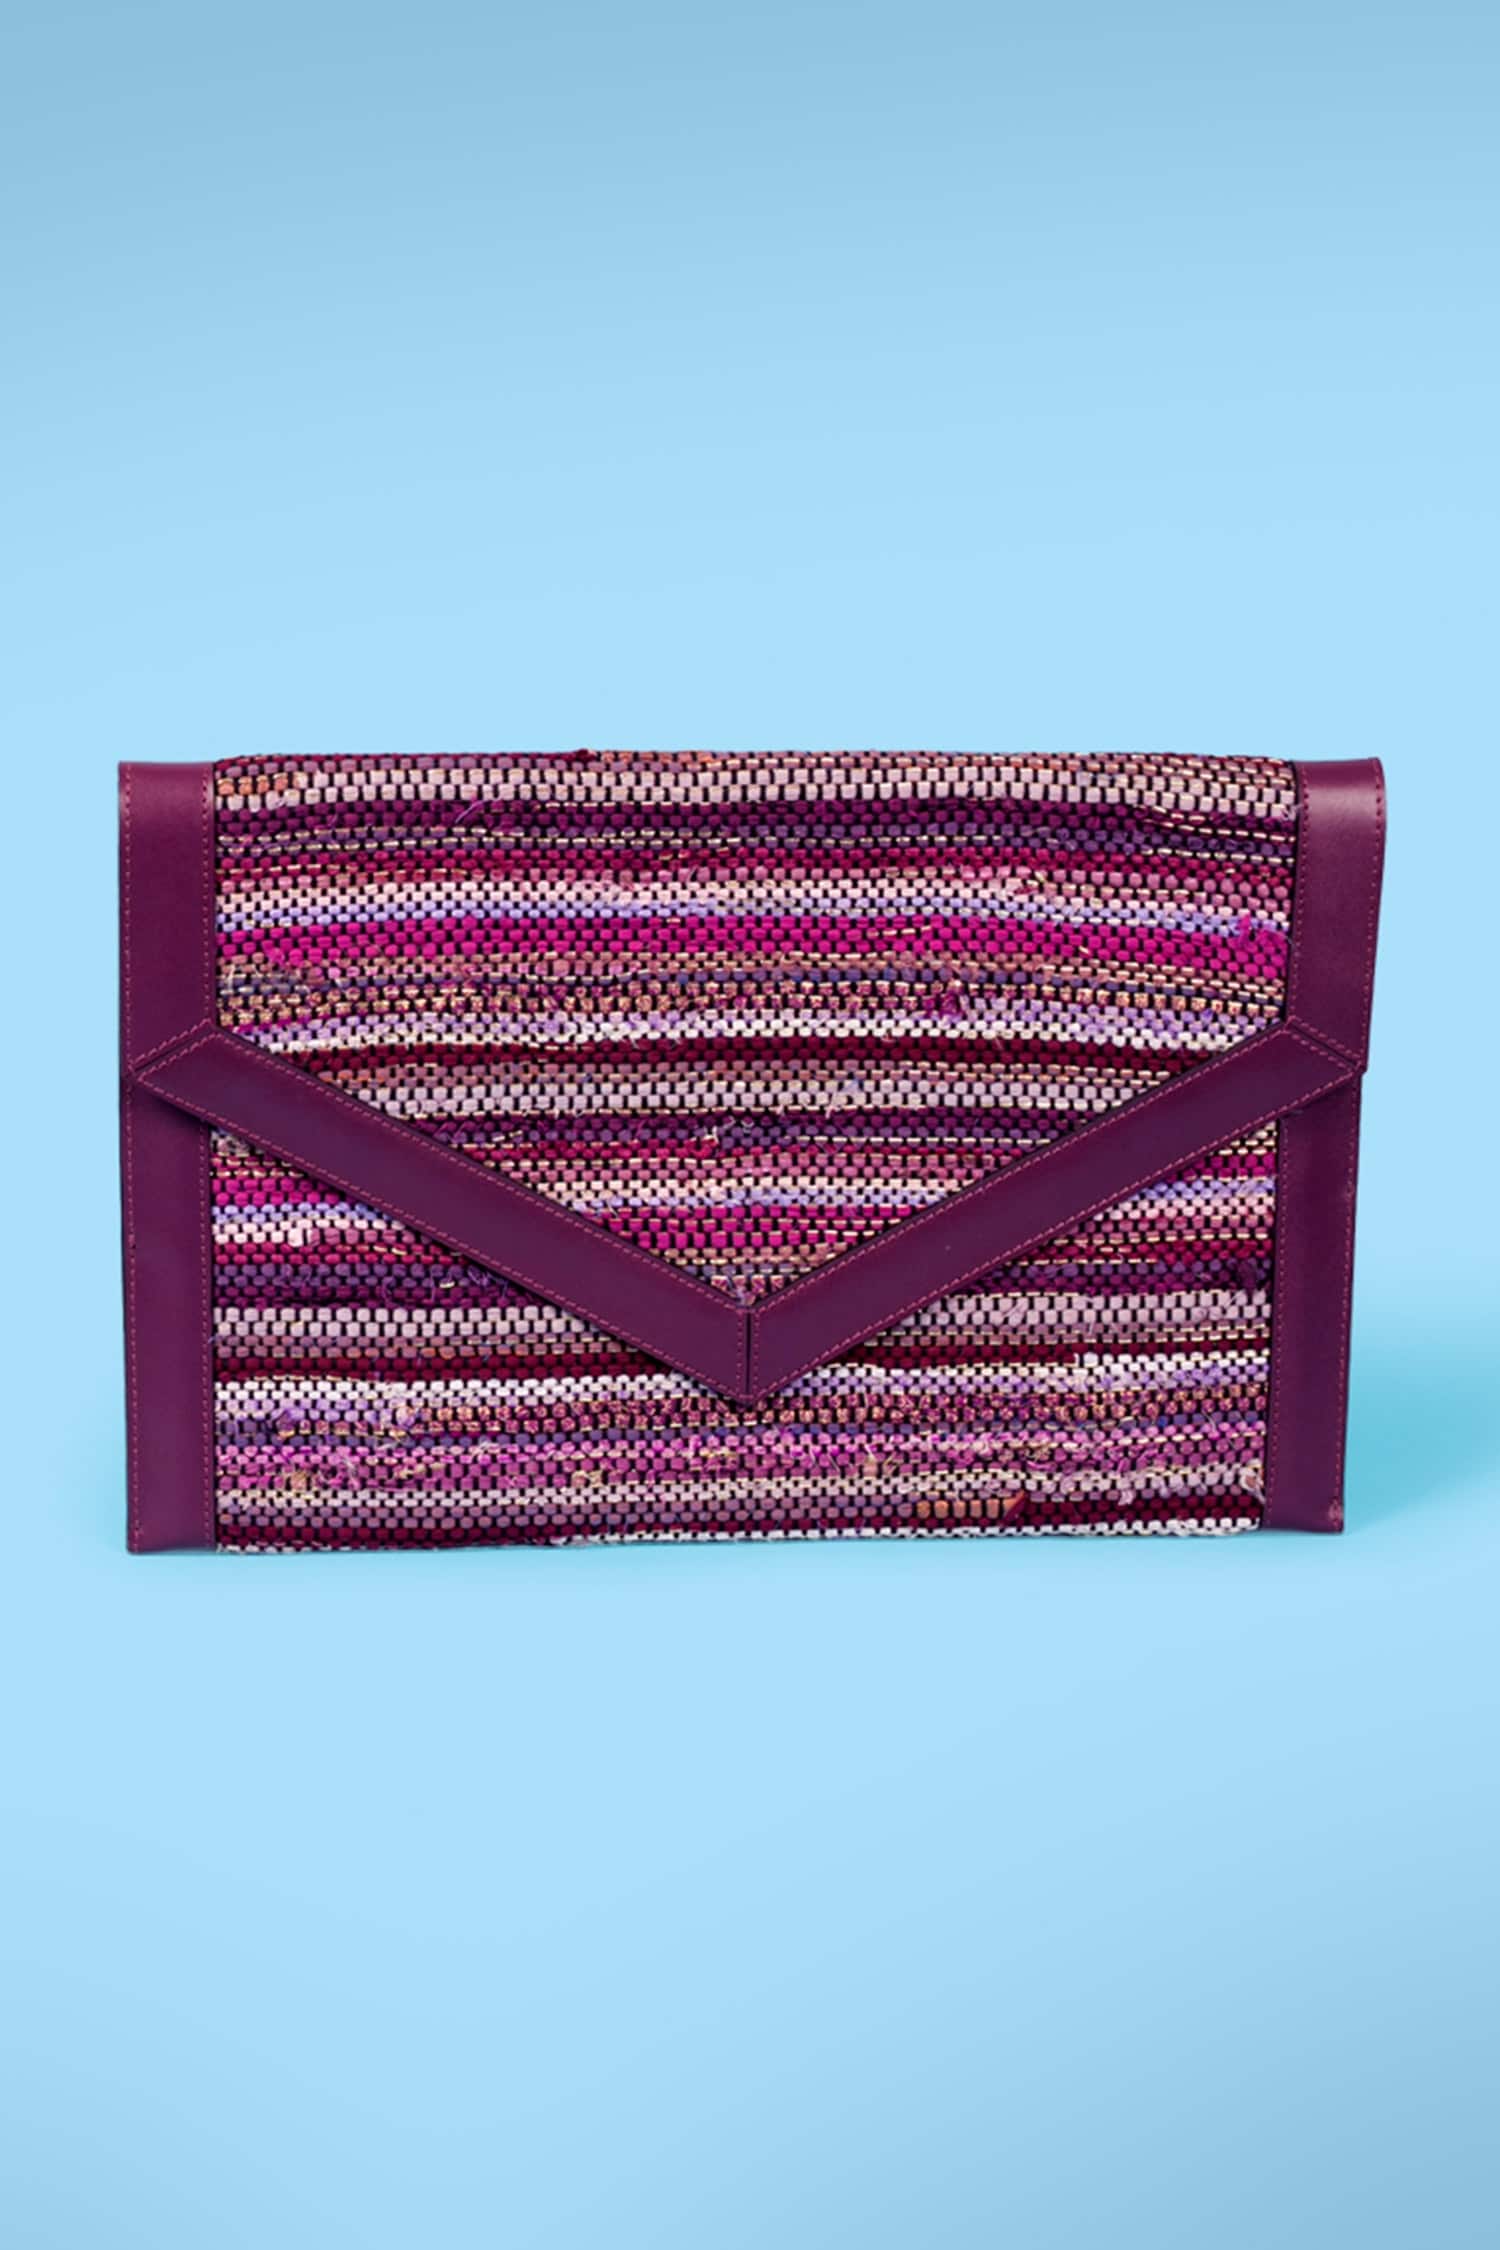 Swarang Designs Chindi Handwoven Envelop Sleeve